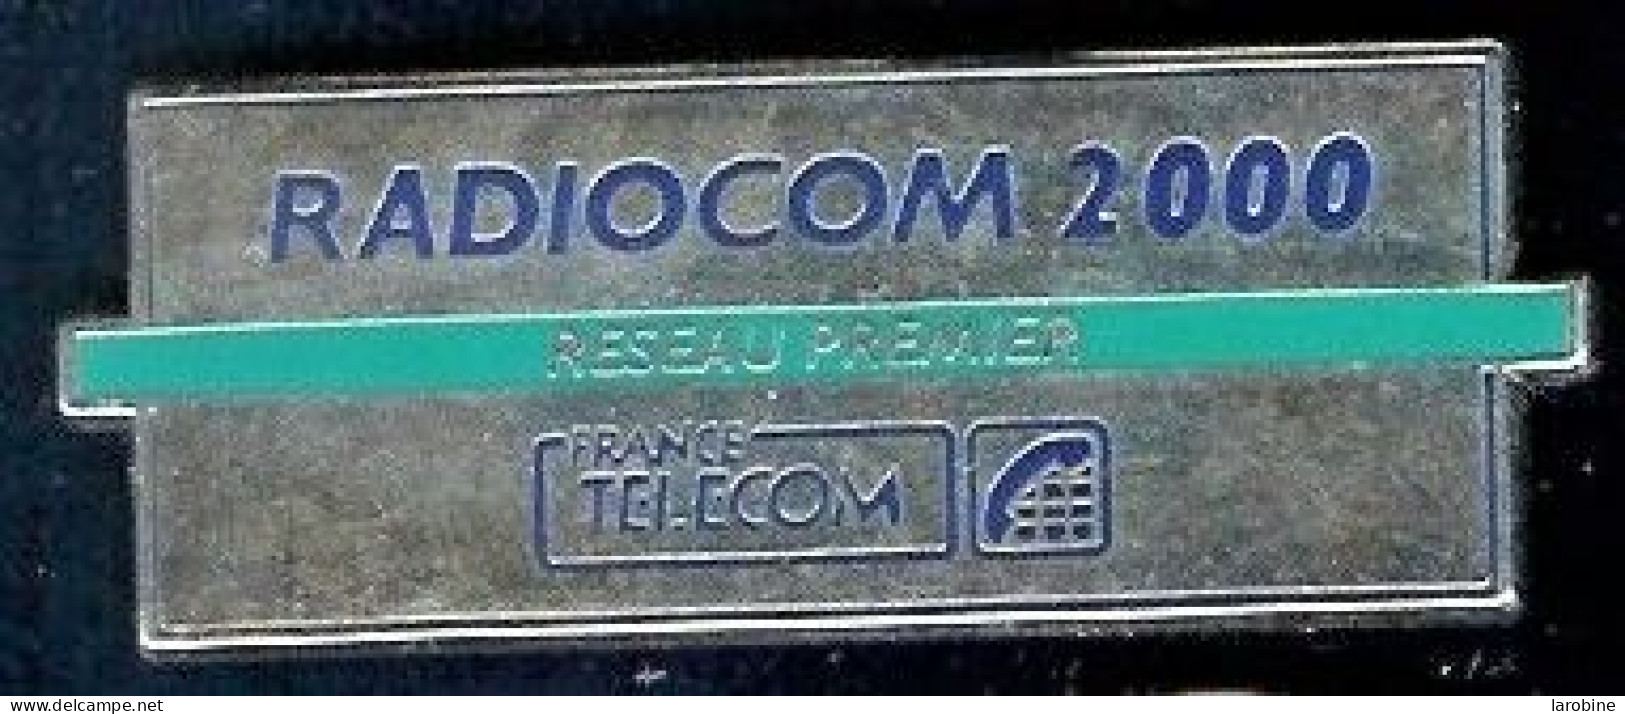 @@  France Telecom RADIOCOM 2000 Réseau Premier (4.5x1.7) @@poFT87 - France Telecom